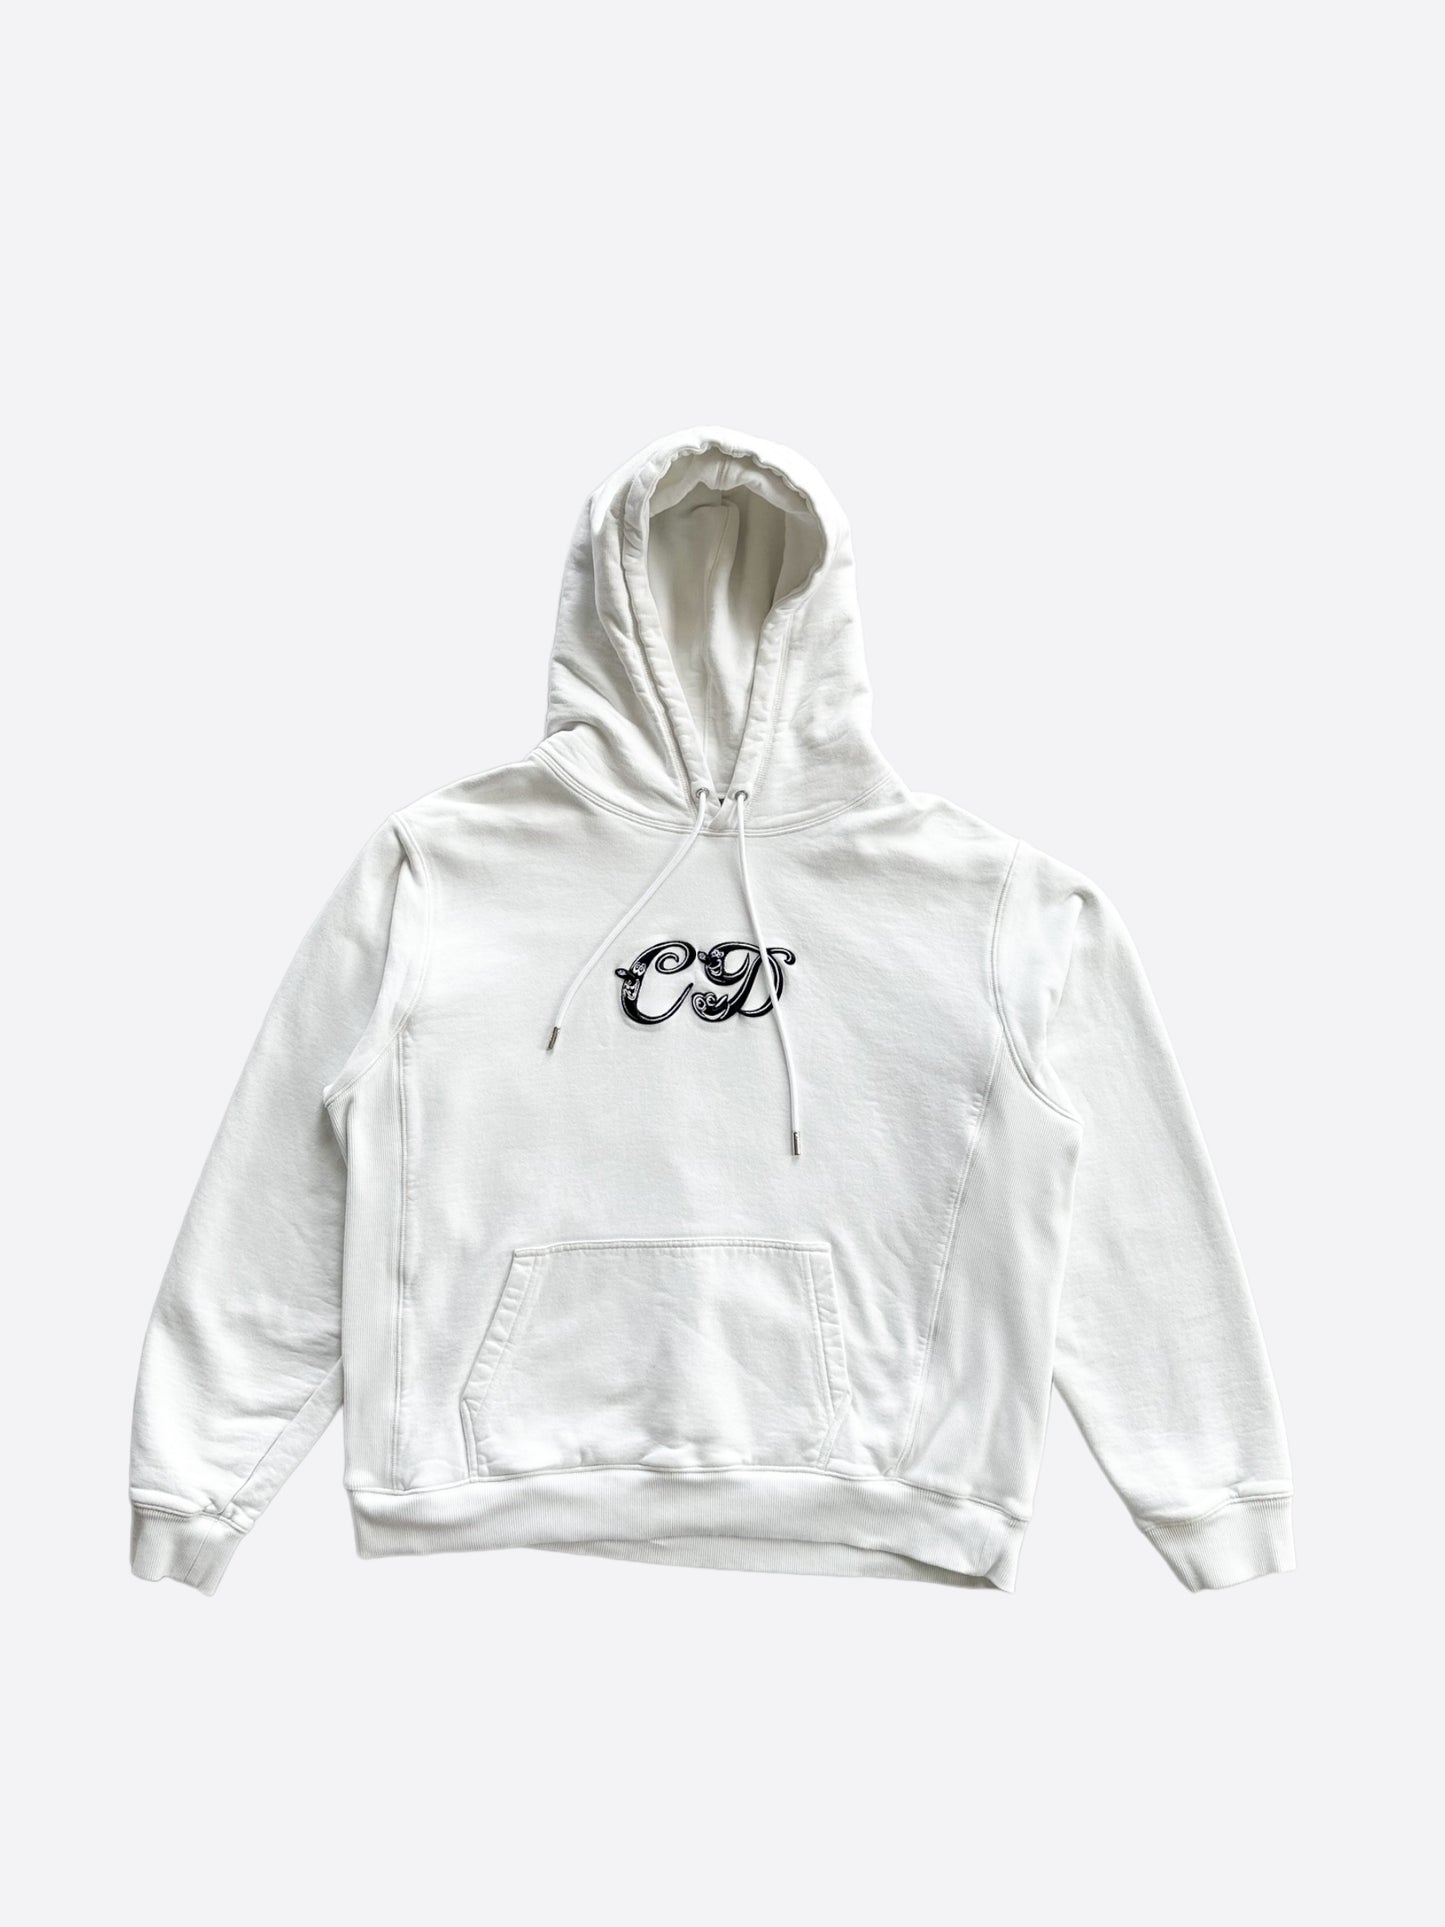 Dior Kenny Scharf White Embroidered Logo Hoodie